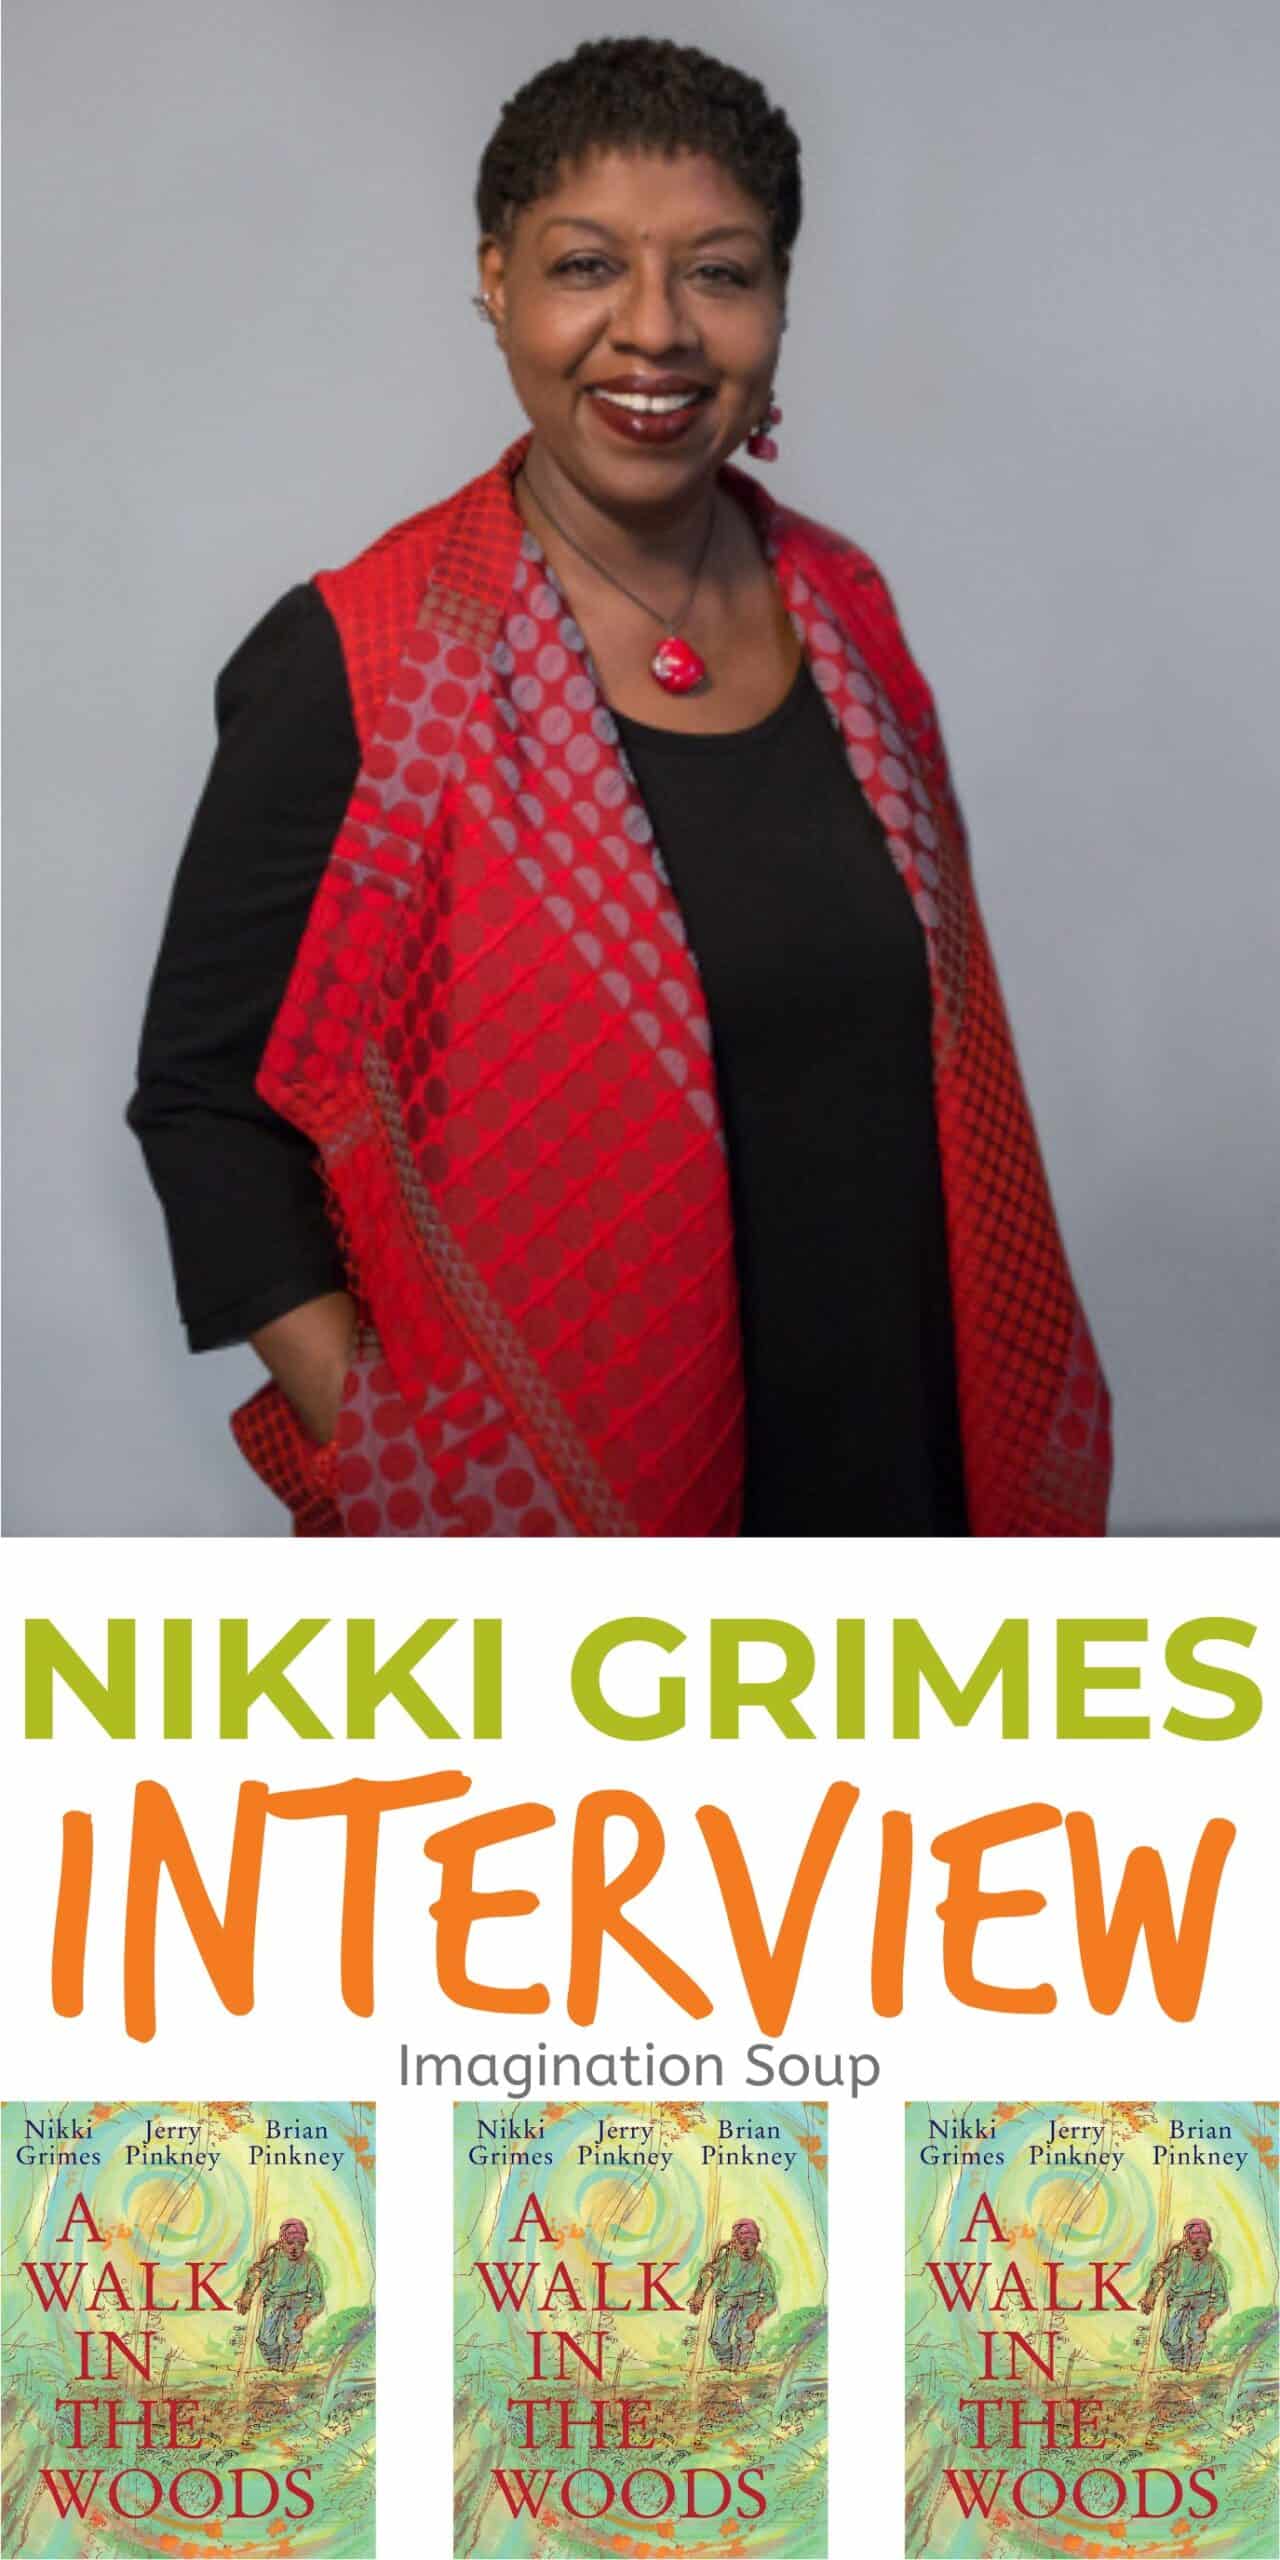 Interview with Nikki Grimes